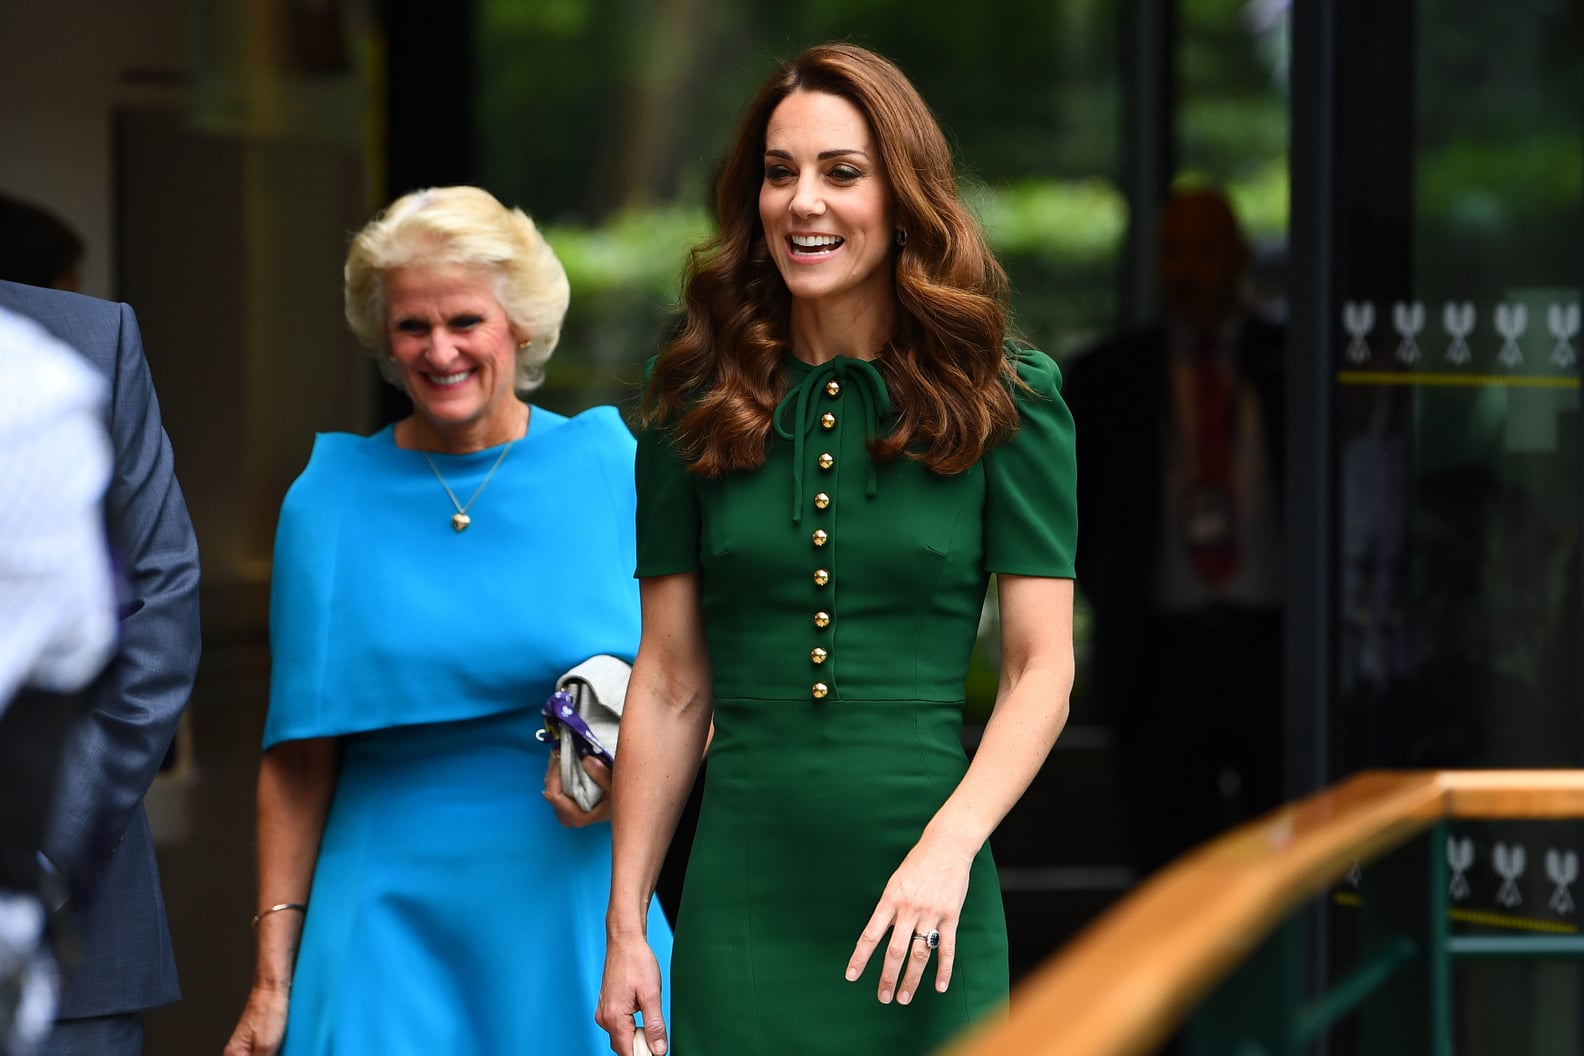 Kate Middleton Green Dress at Wimbledon 2019 | POPSUGAR Fashion